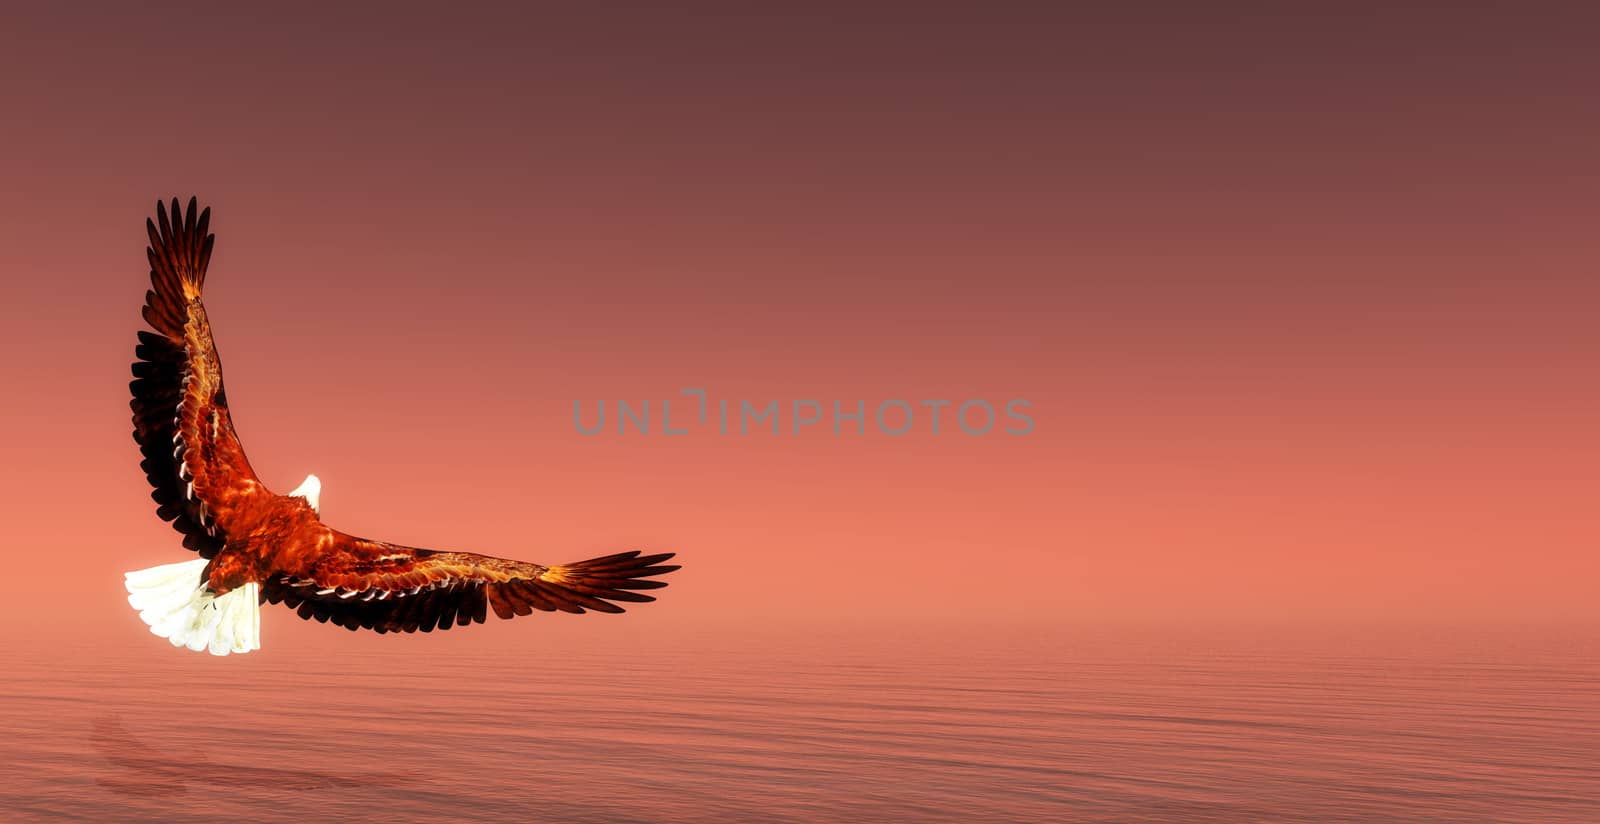 Eagle flying upon ocean in brown background - 3D render